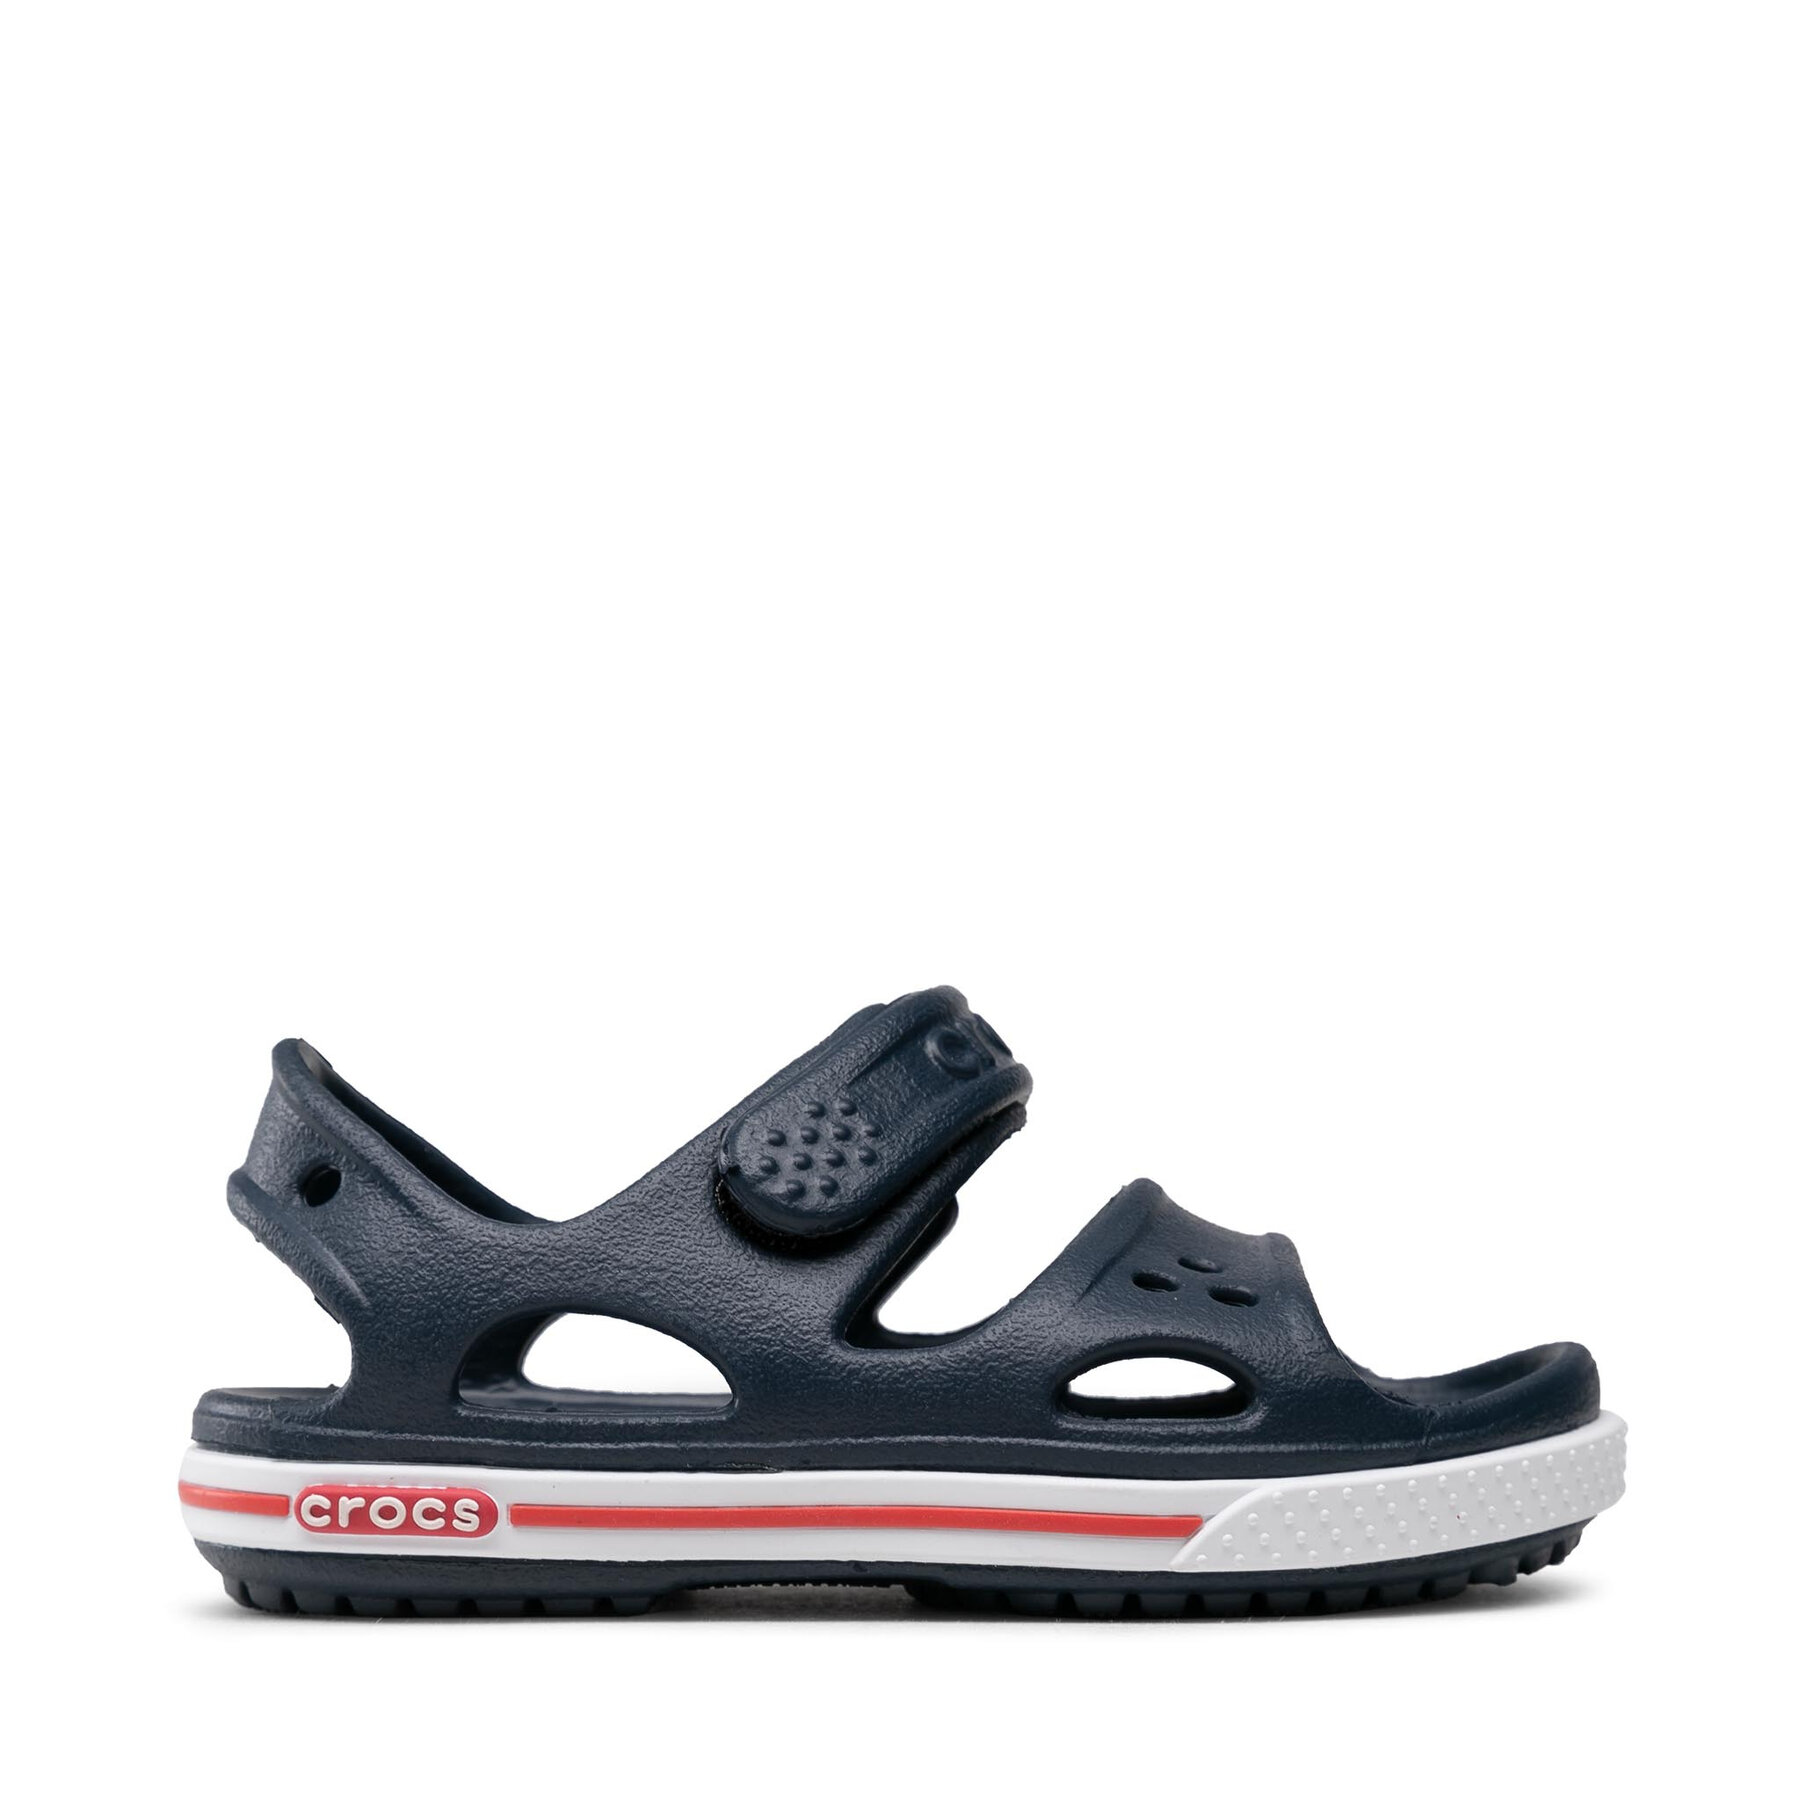 Comprar en oferta Crocs Crocband II Sandal PS navy/white